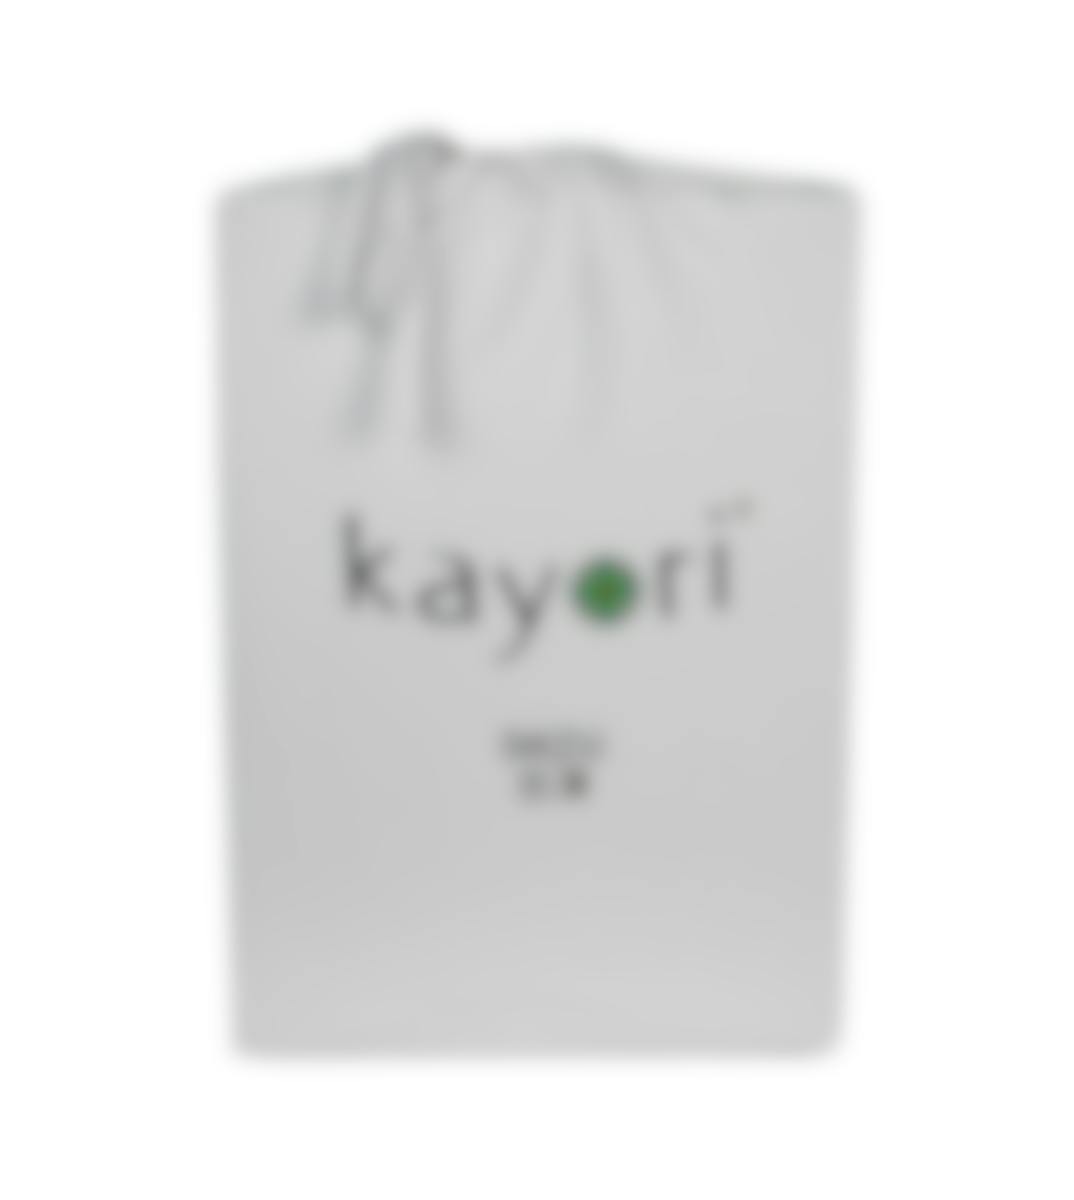 Kayori drap-housse Shizu Grey Jersey de coton (coin 35 cm)